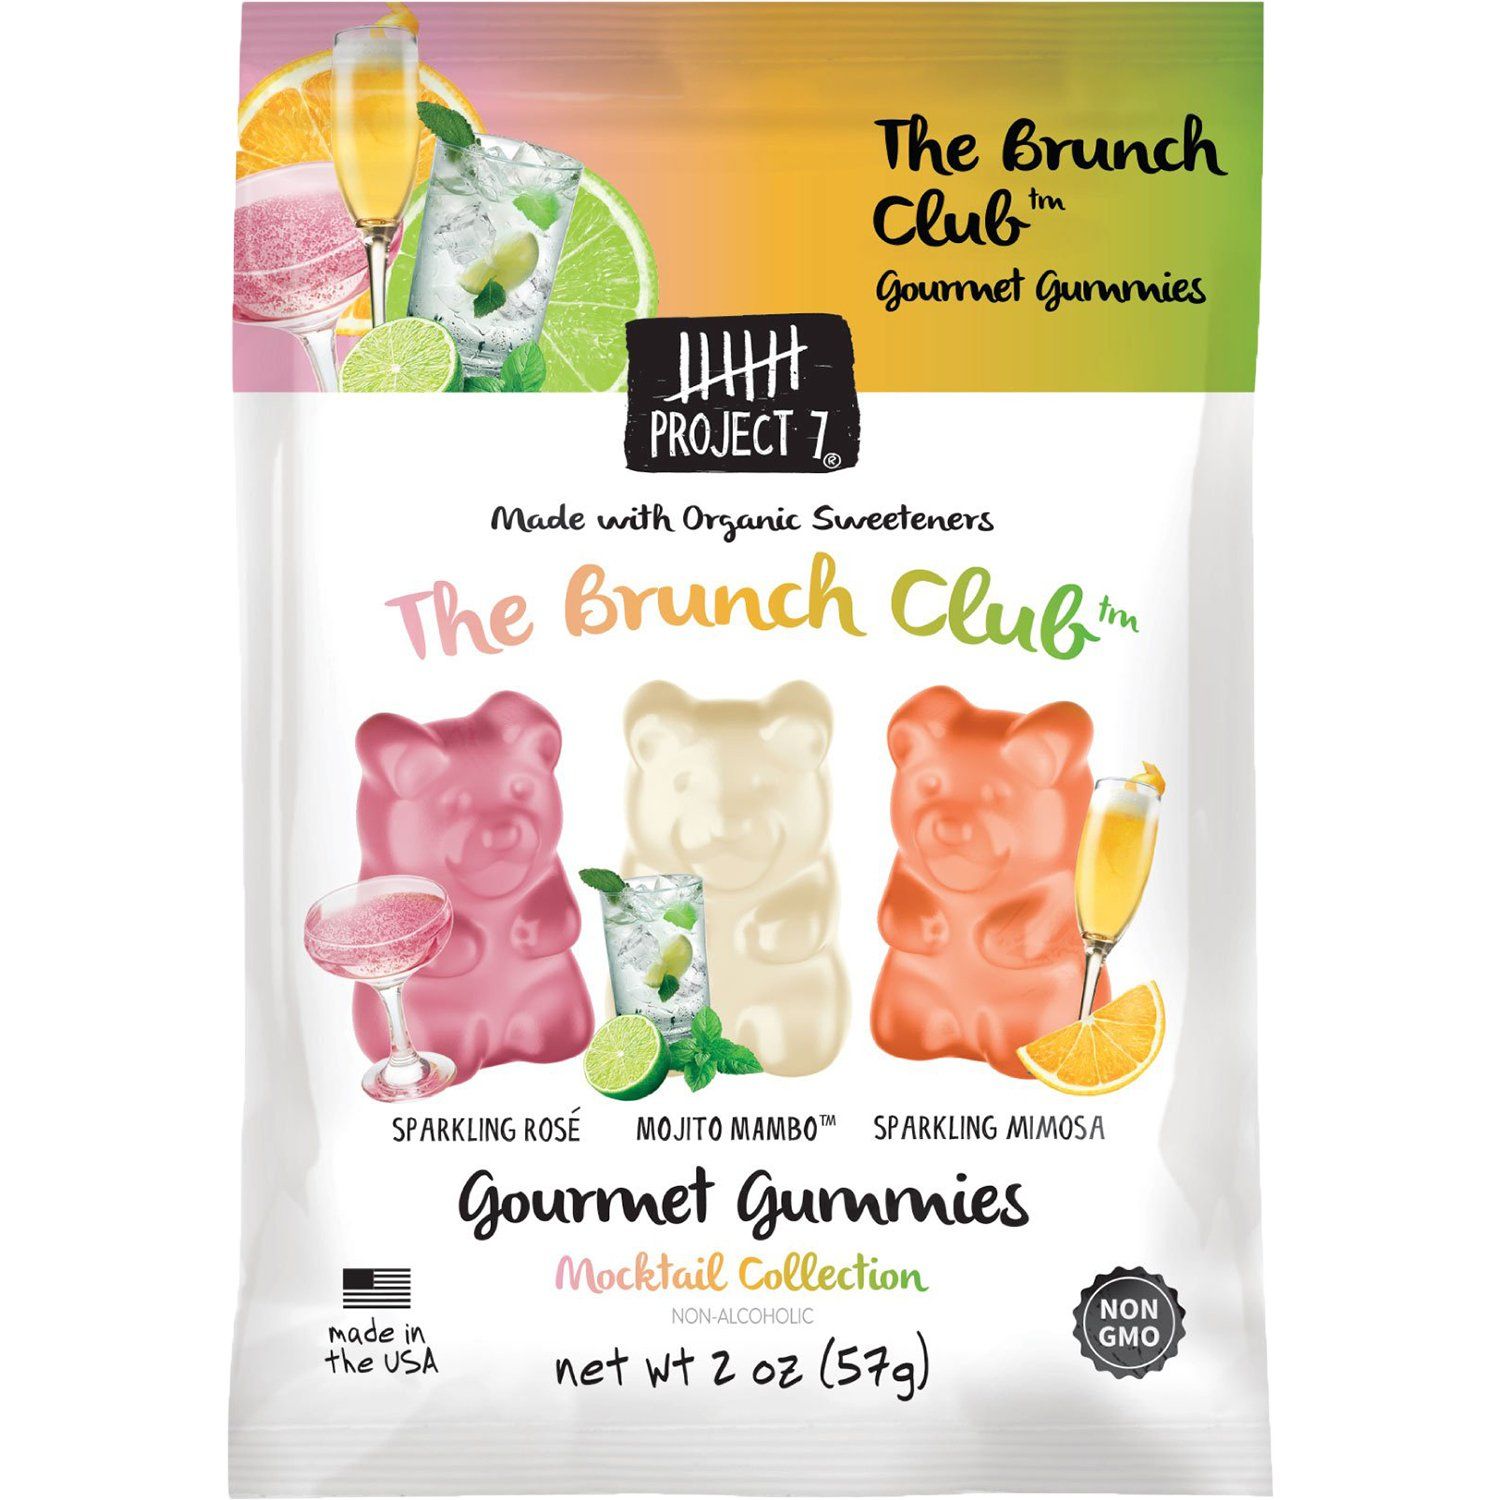 Project 7 Gourmet Gummies Project 7 Brunch Club 2 Ounce 